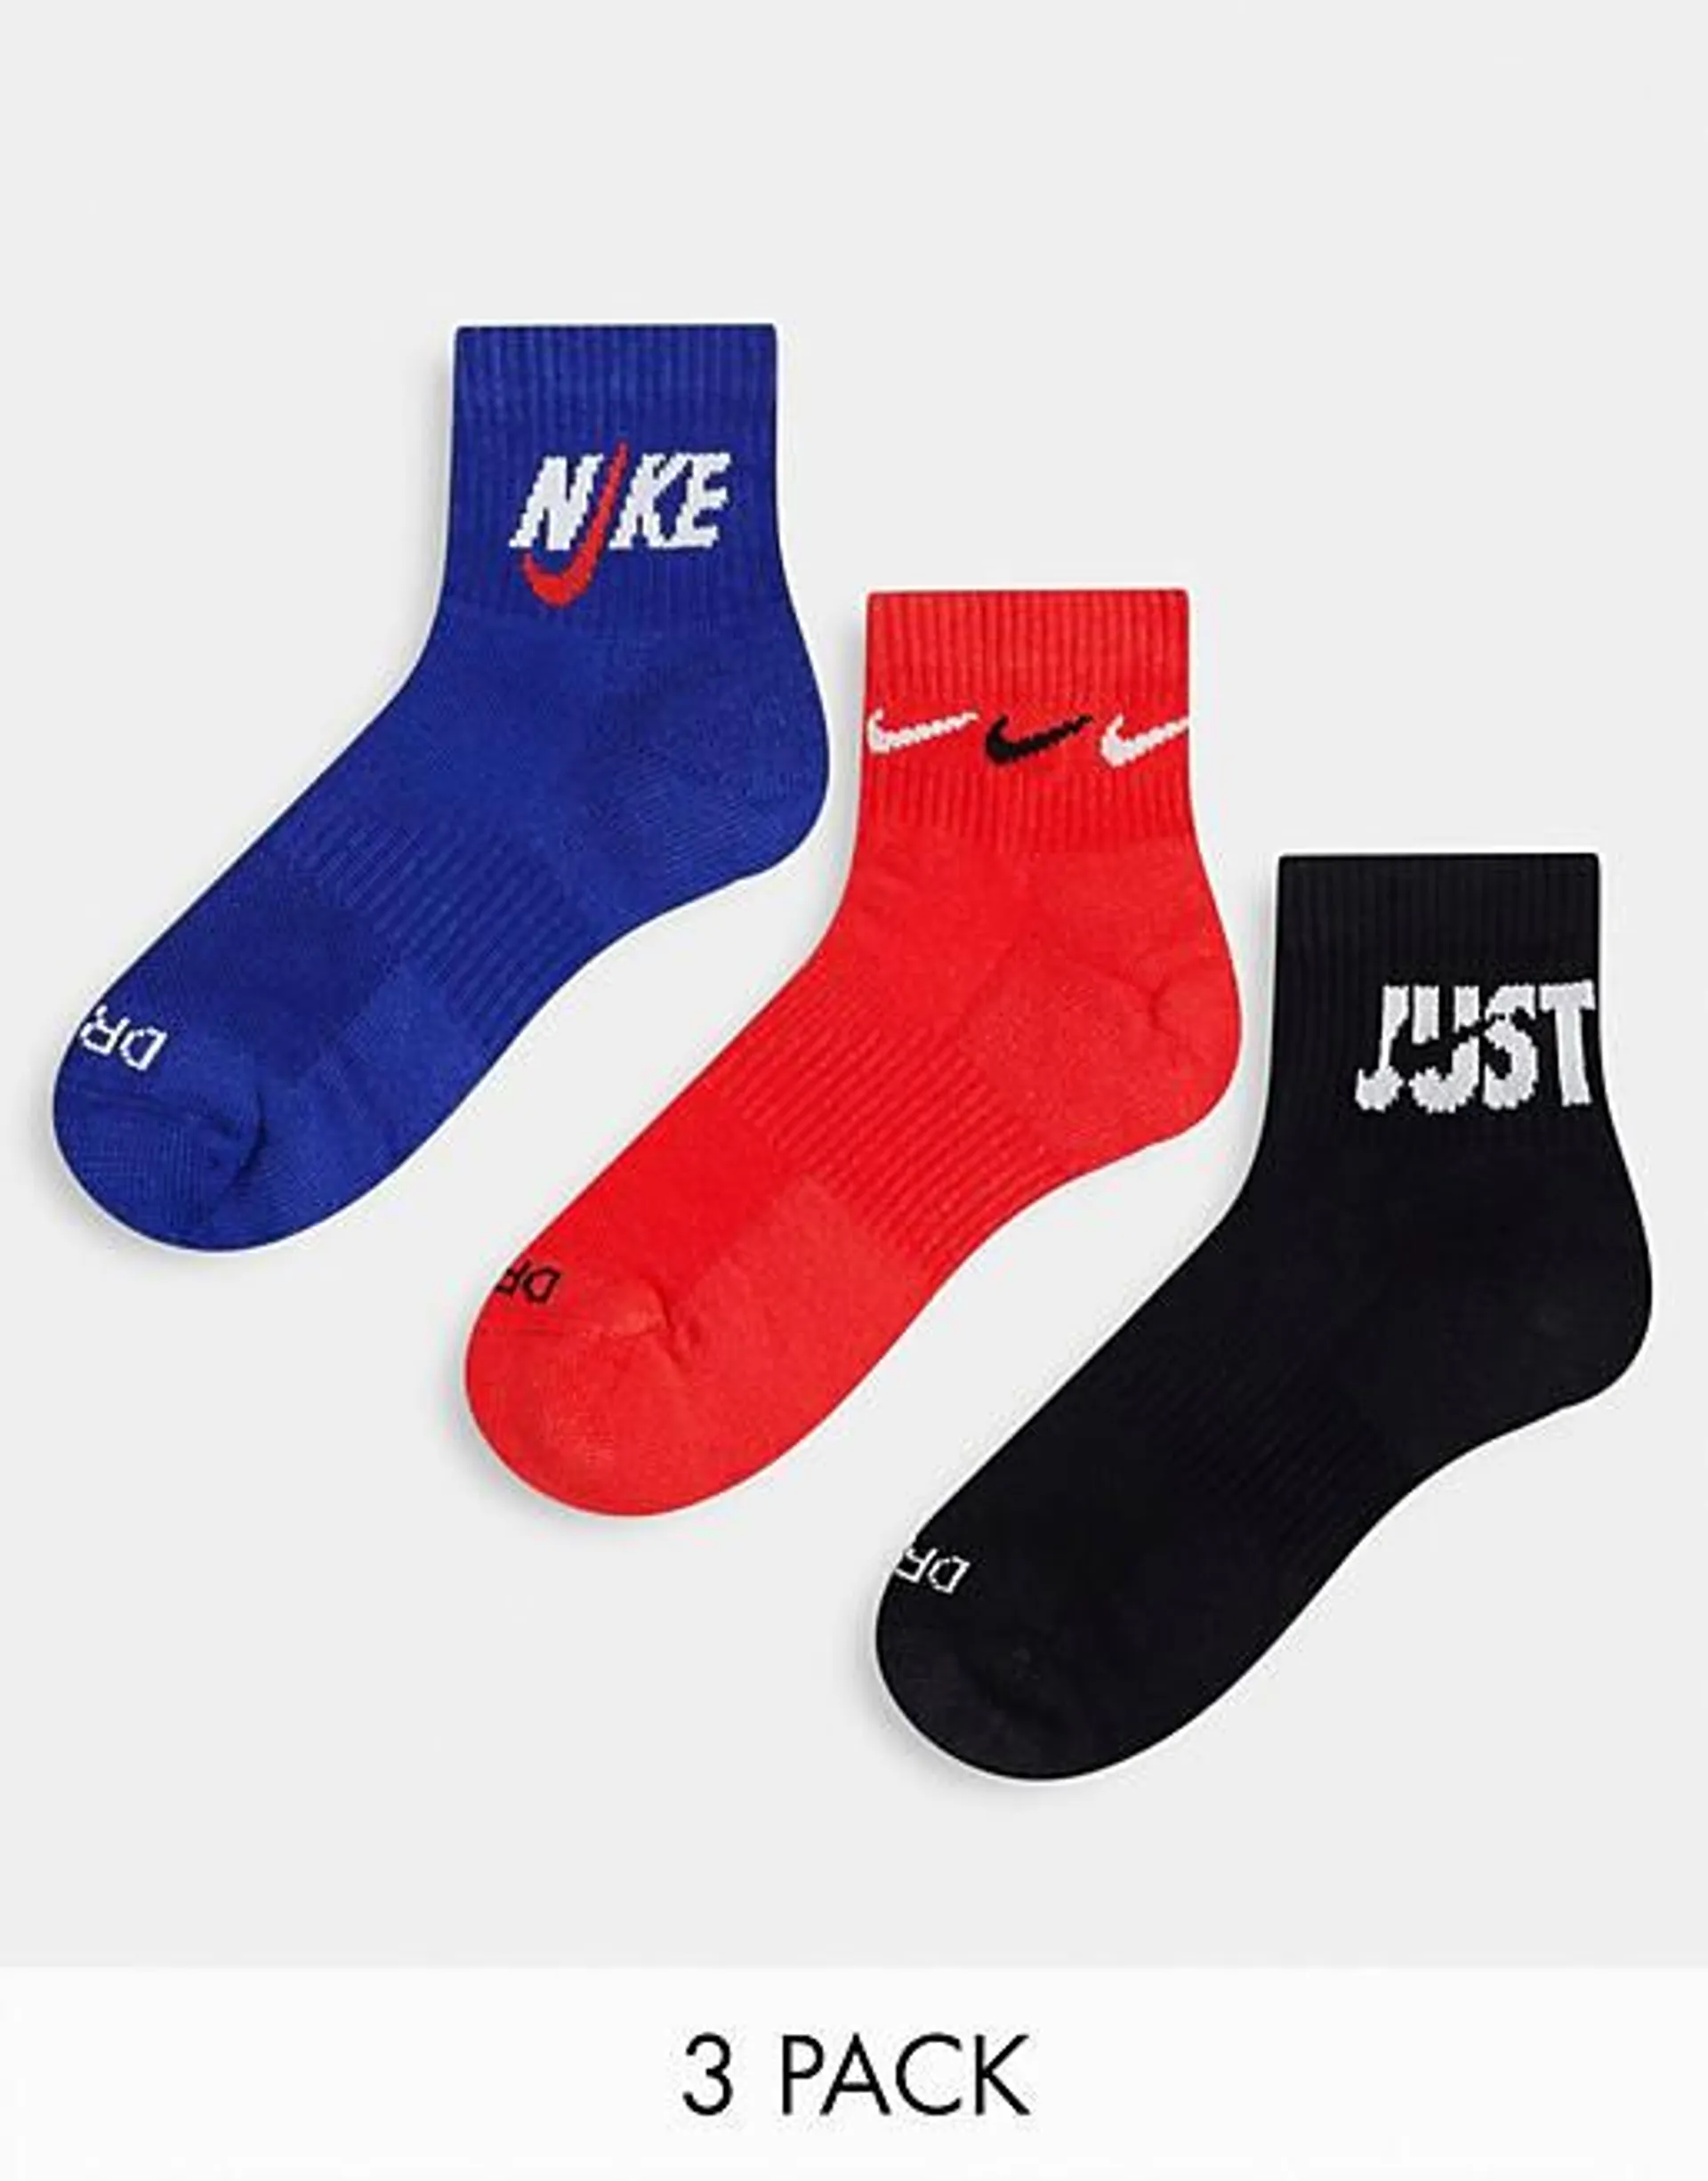 Nike Training unisex cush 3 pack ankle logo socks in blue, red and black